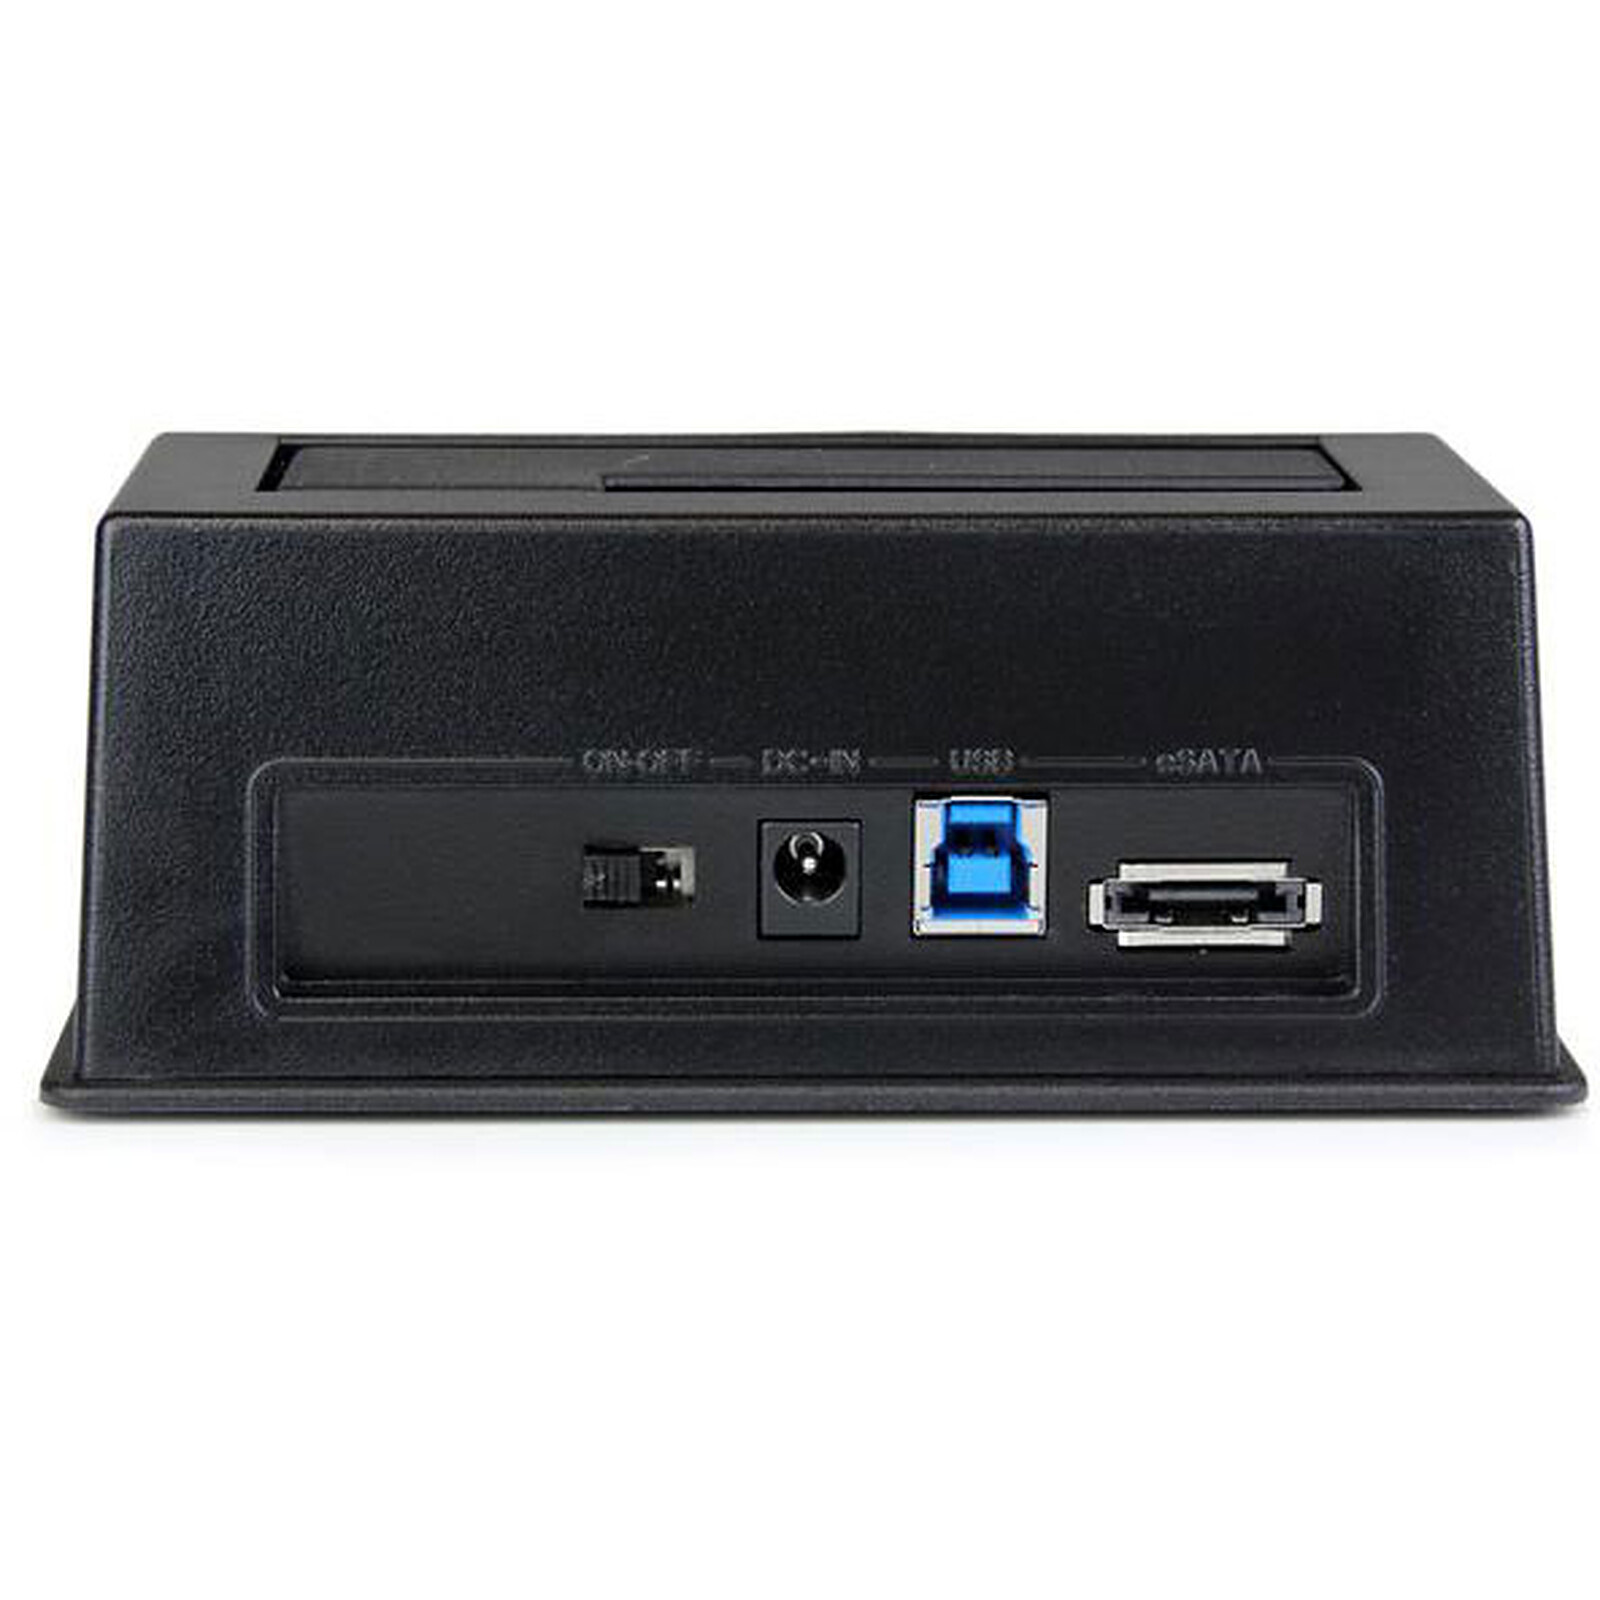 StarTech.com Docking station for 2.5" and SATA HDD/SSD on USB 3.0/eSATA port - Hard drive on LDLC